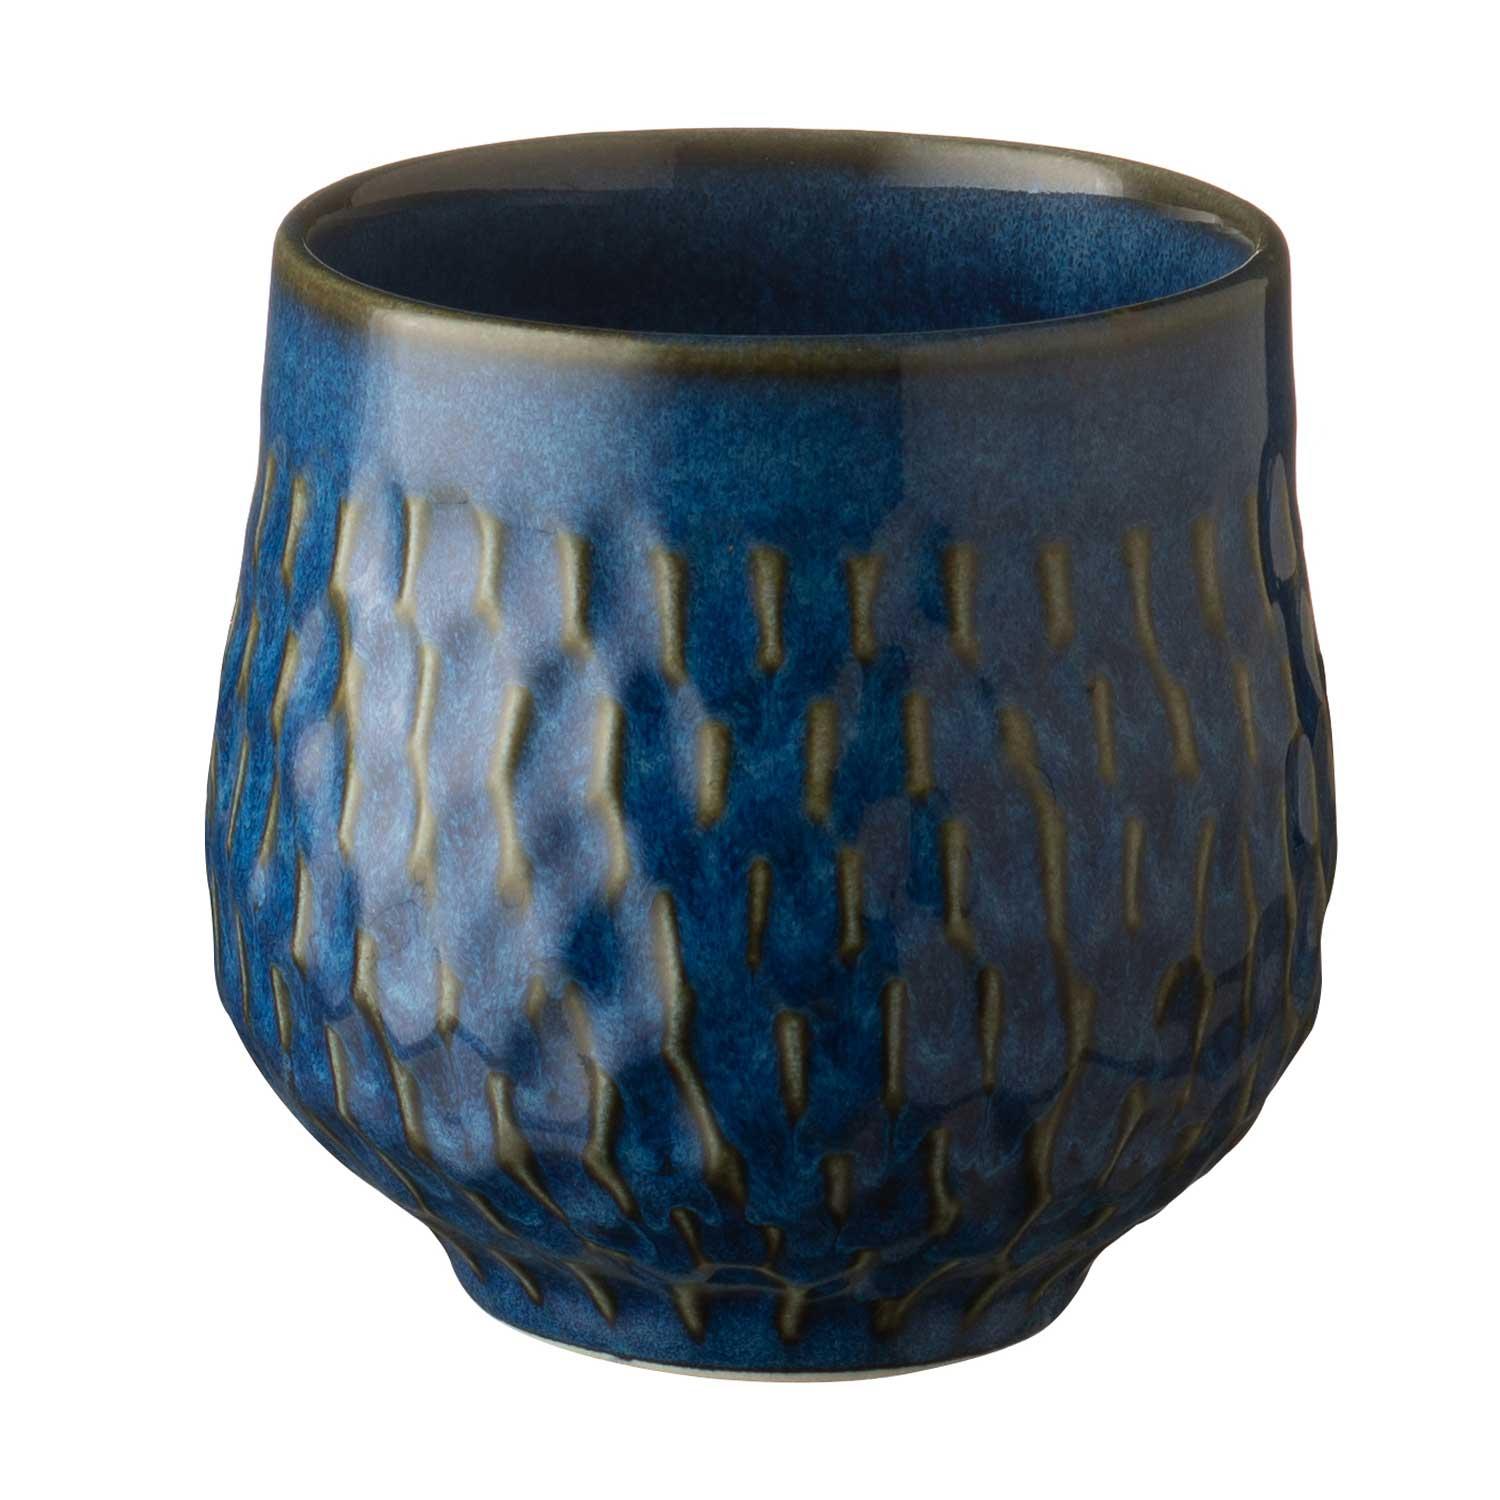 Classic Round Tea/Coffee Pot Varied Blue - Jenggala Keramik Bali